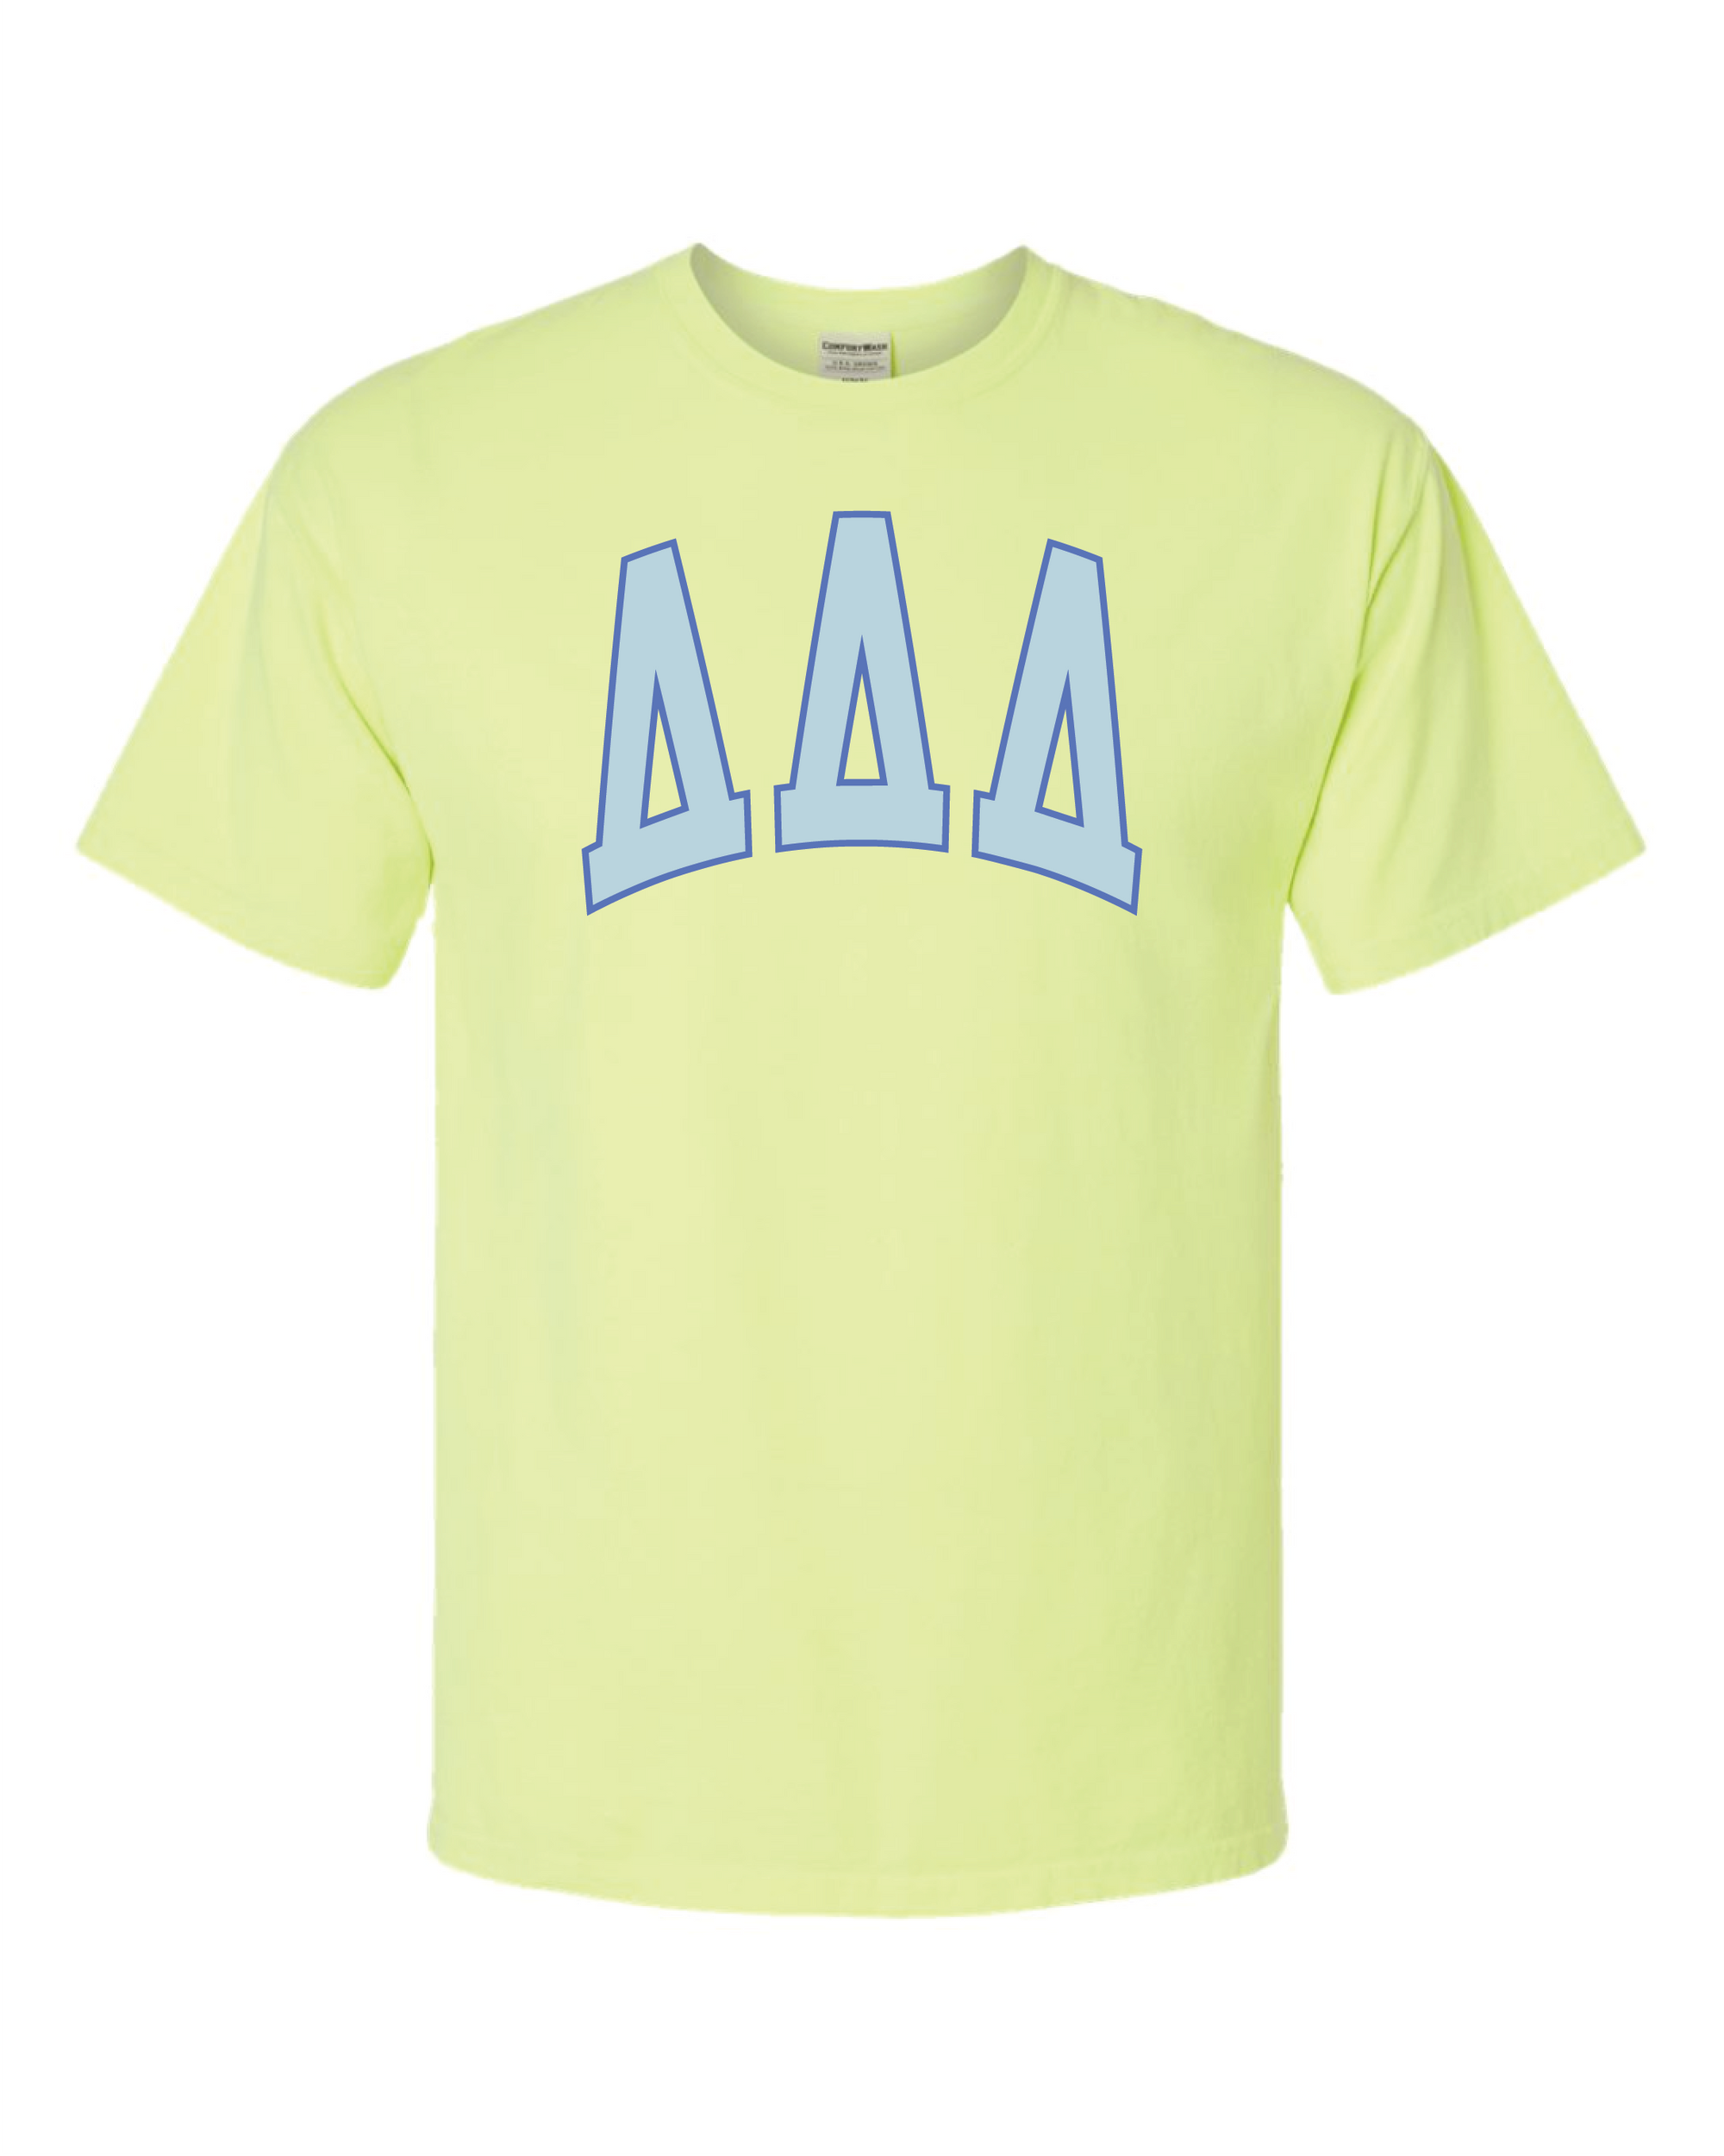 Tri Delta Varsity Letters Tshirt